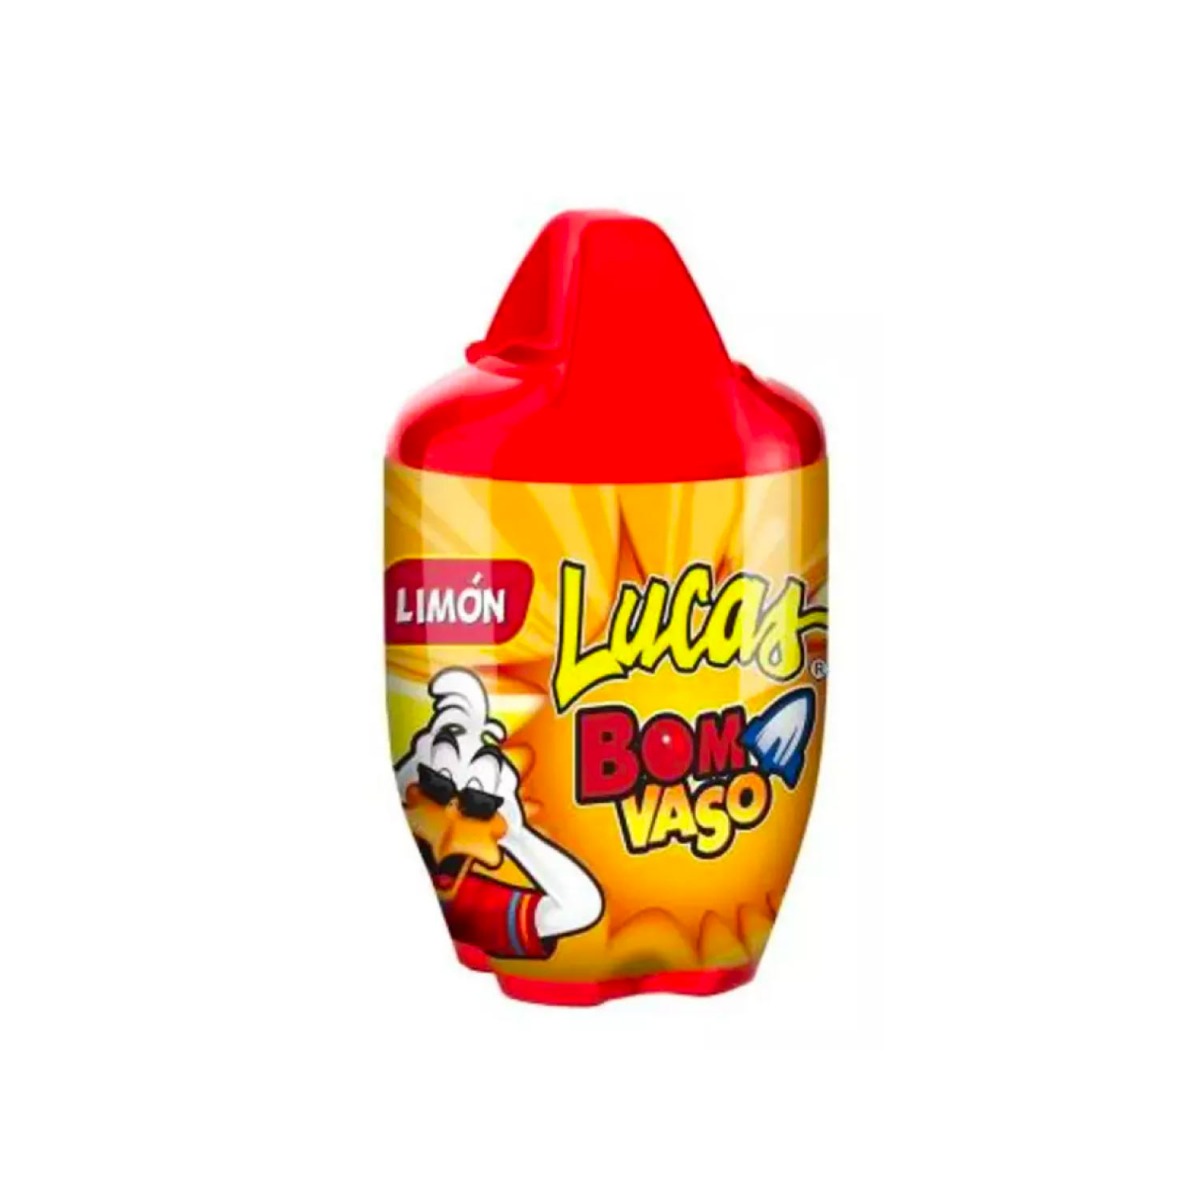 Lucas Bom Vaso Limon C/Chicle 24/10/30 Gr(Uf)